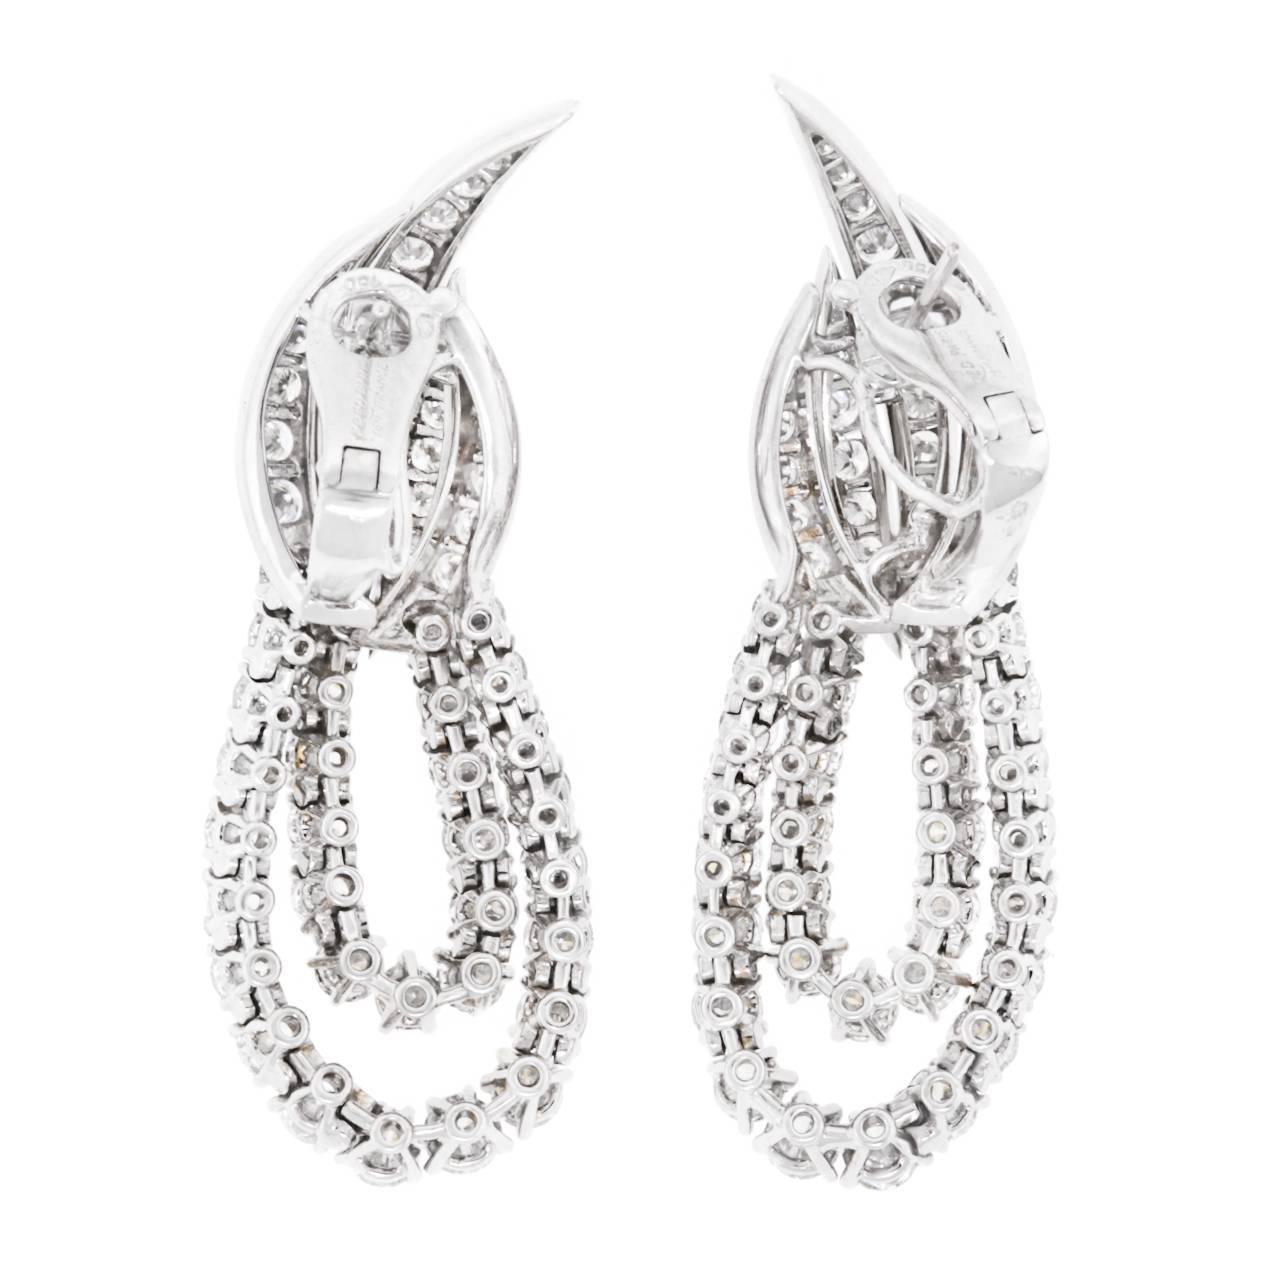 Fred Paris 10 Carat Total Weight Diamond Chandelier Platinum Earrings 3